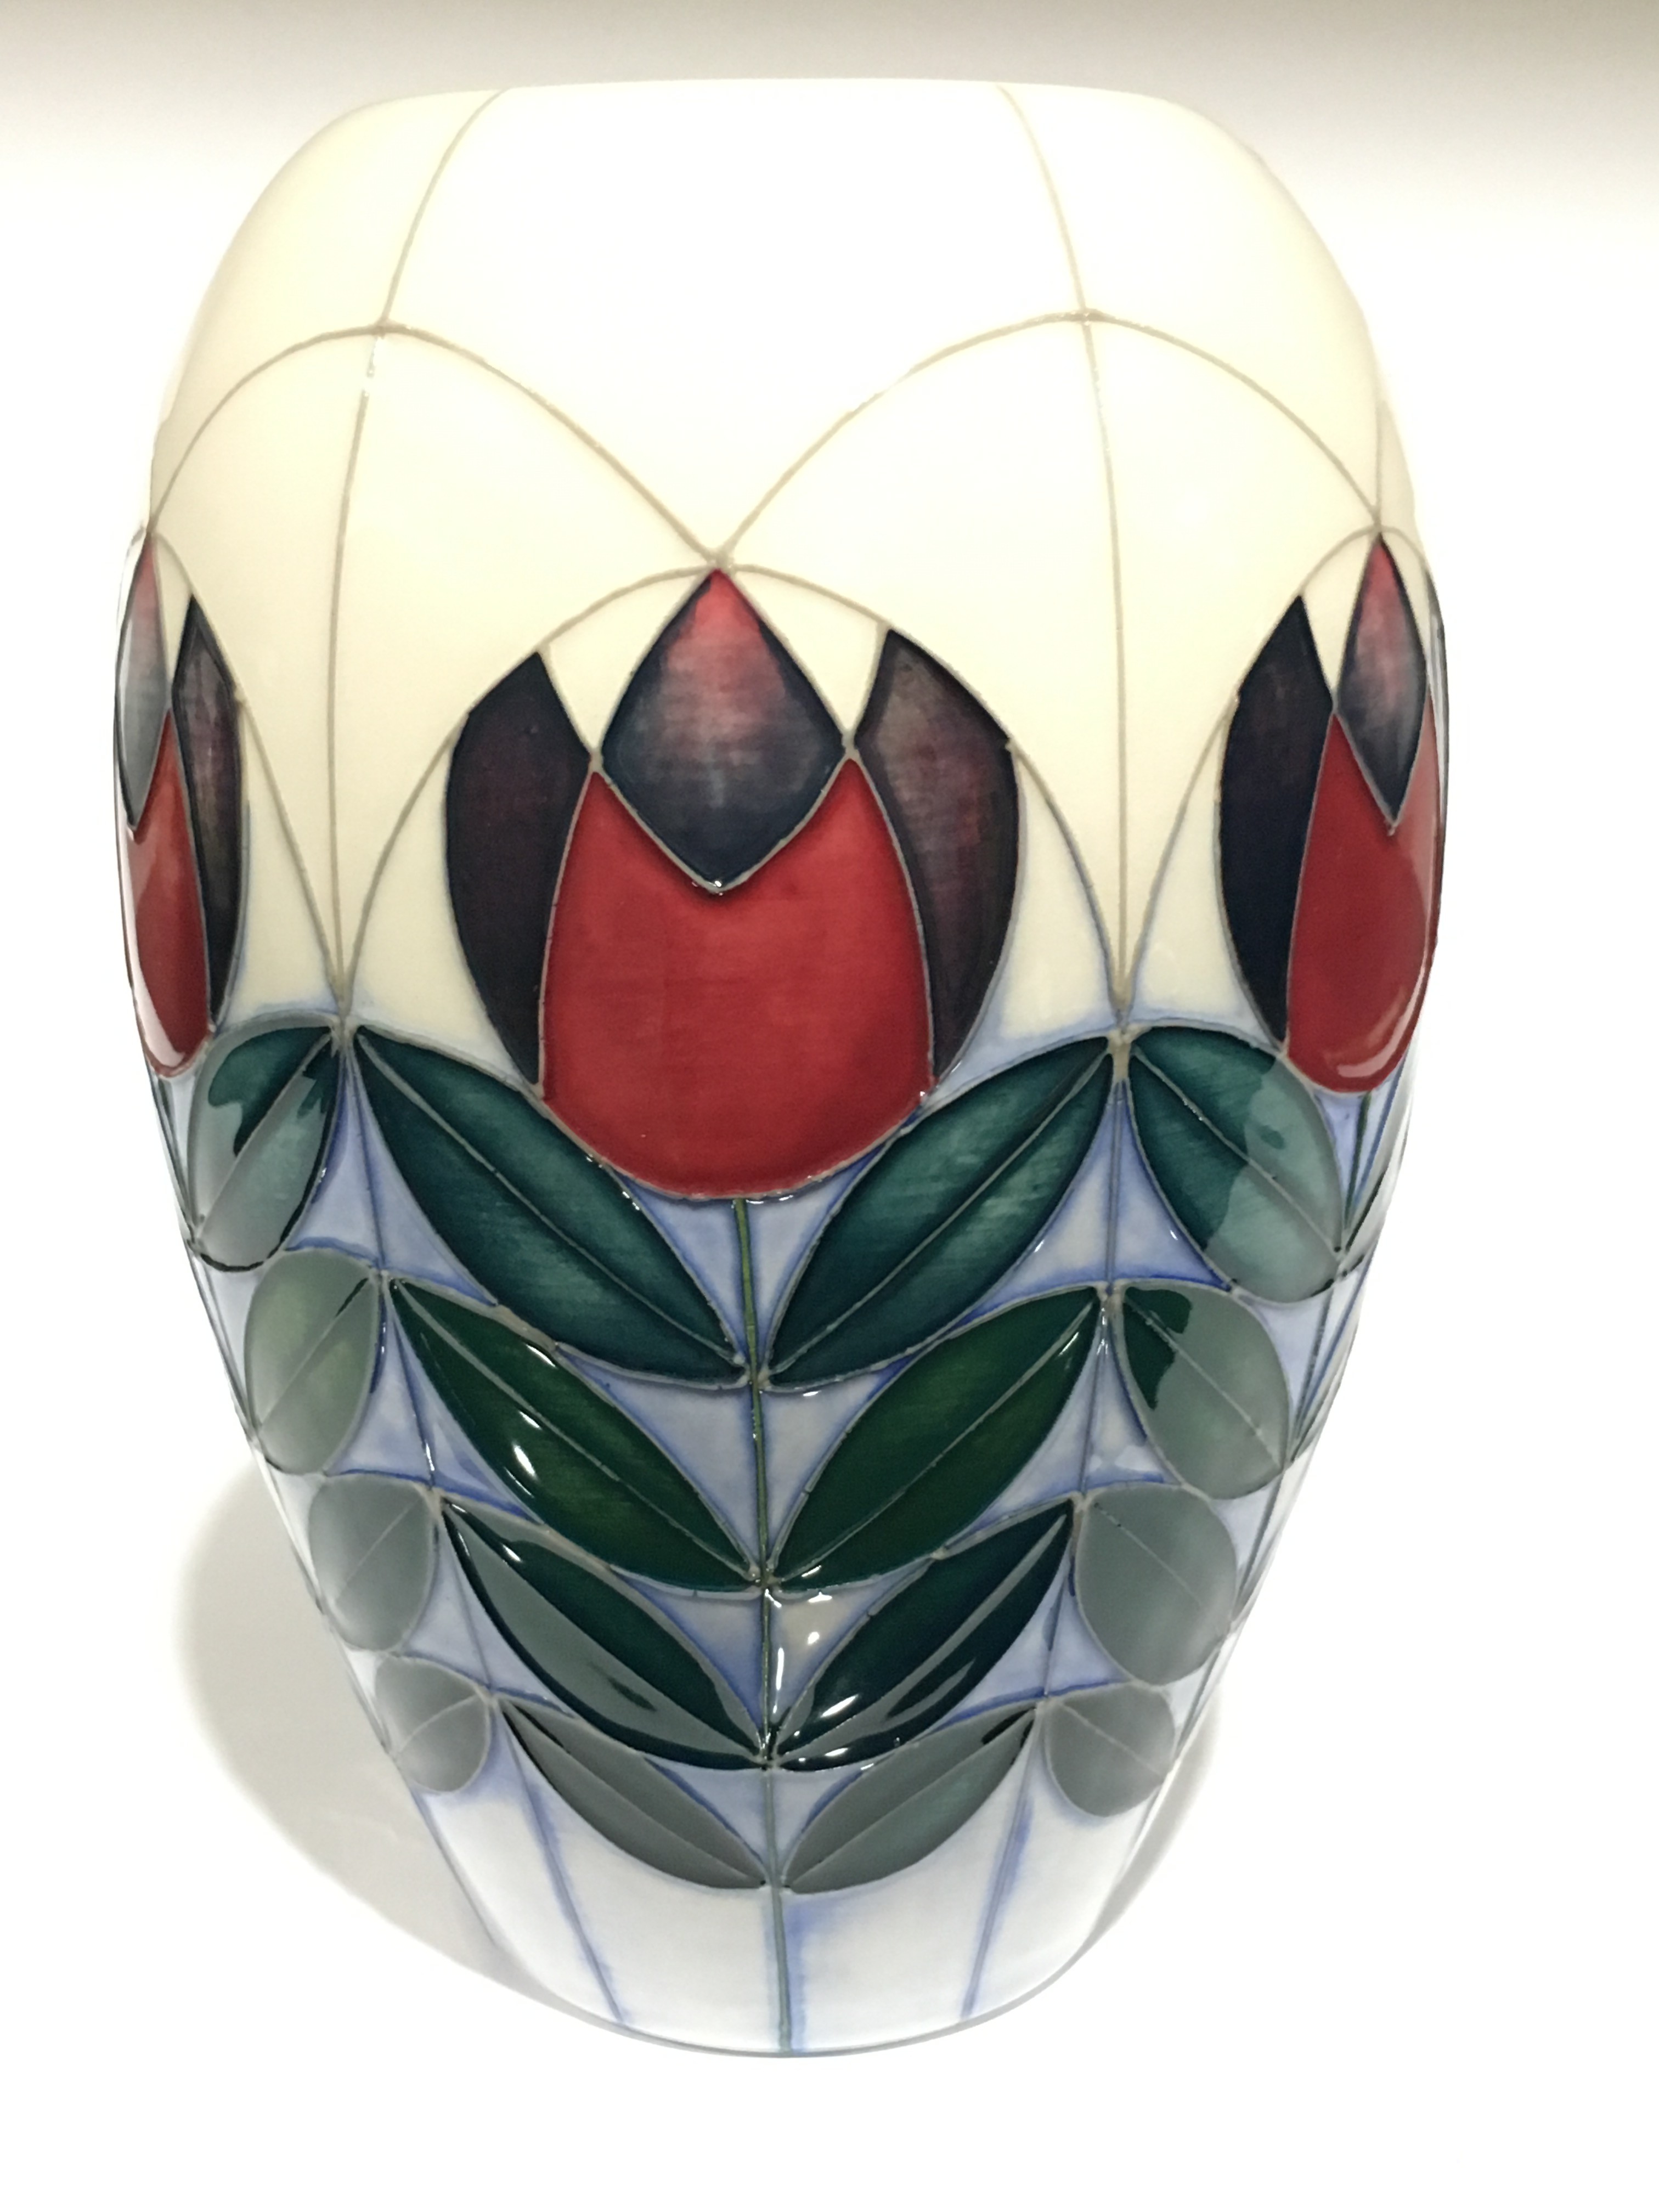 TULIPURPLE: A Trial Moorcroft Pottery vase by Nicola Slaney dated 5.2.15 (17.5cm high).